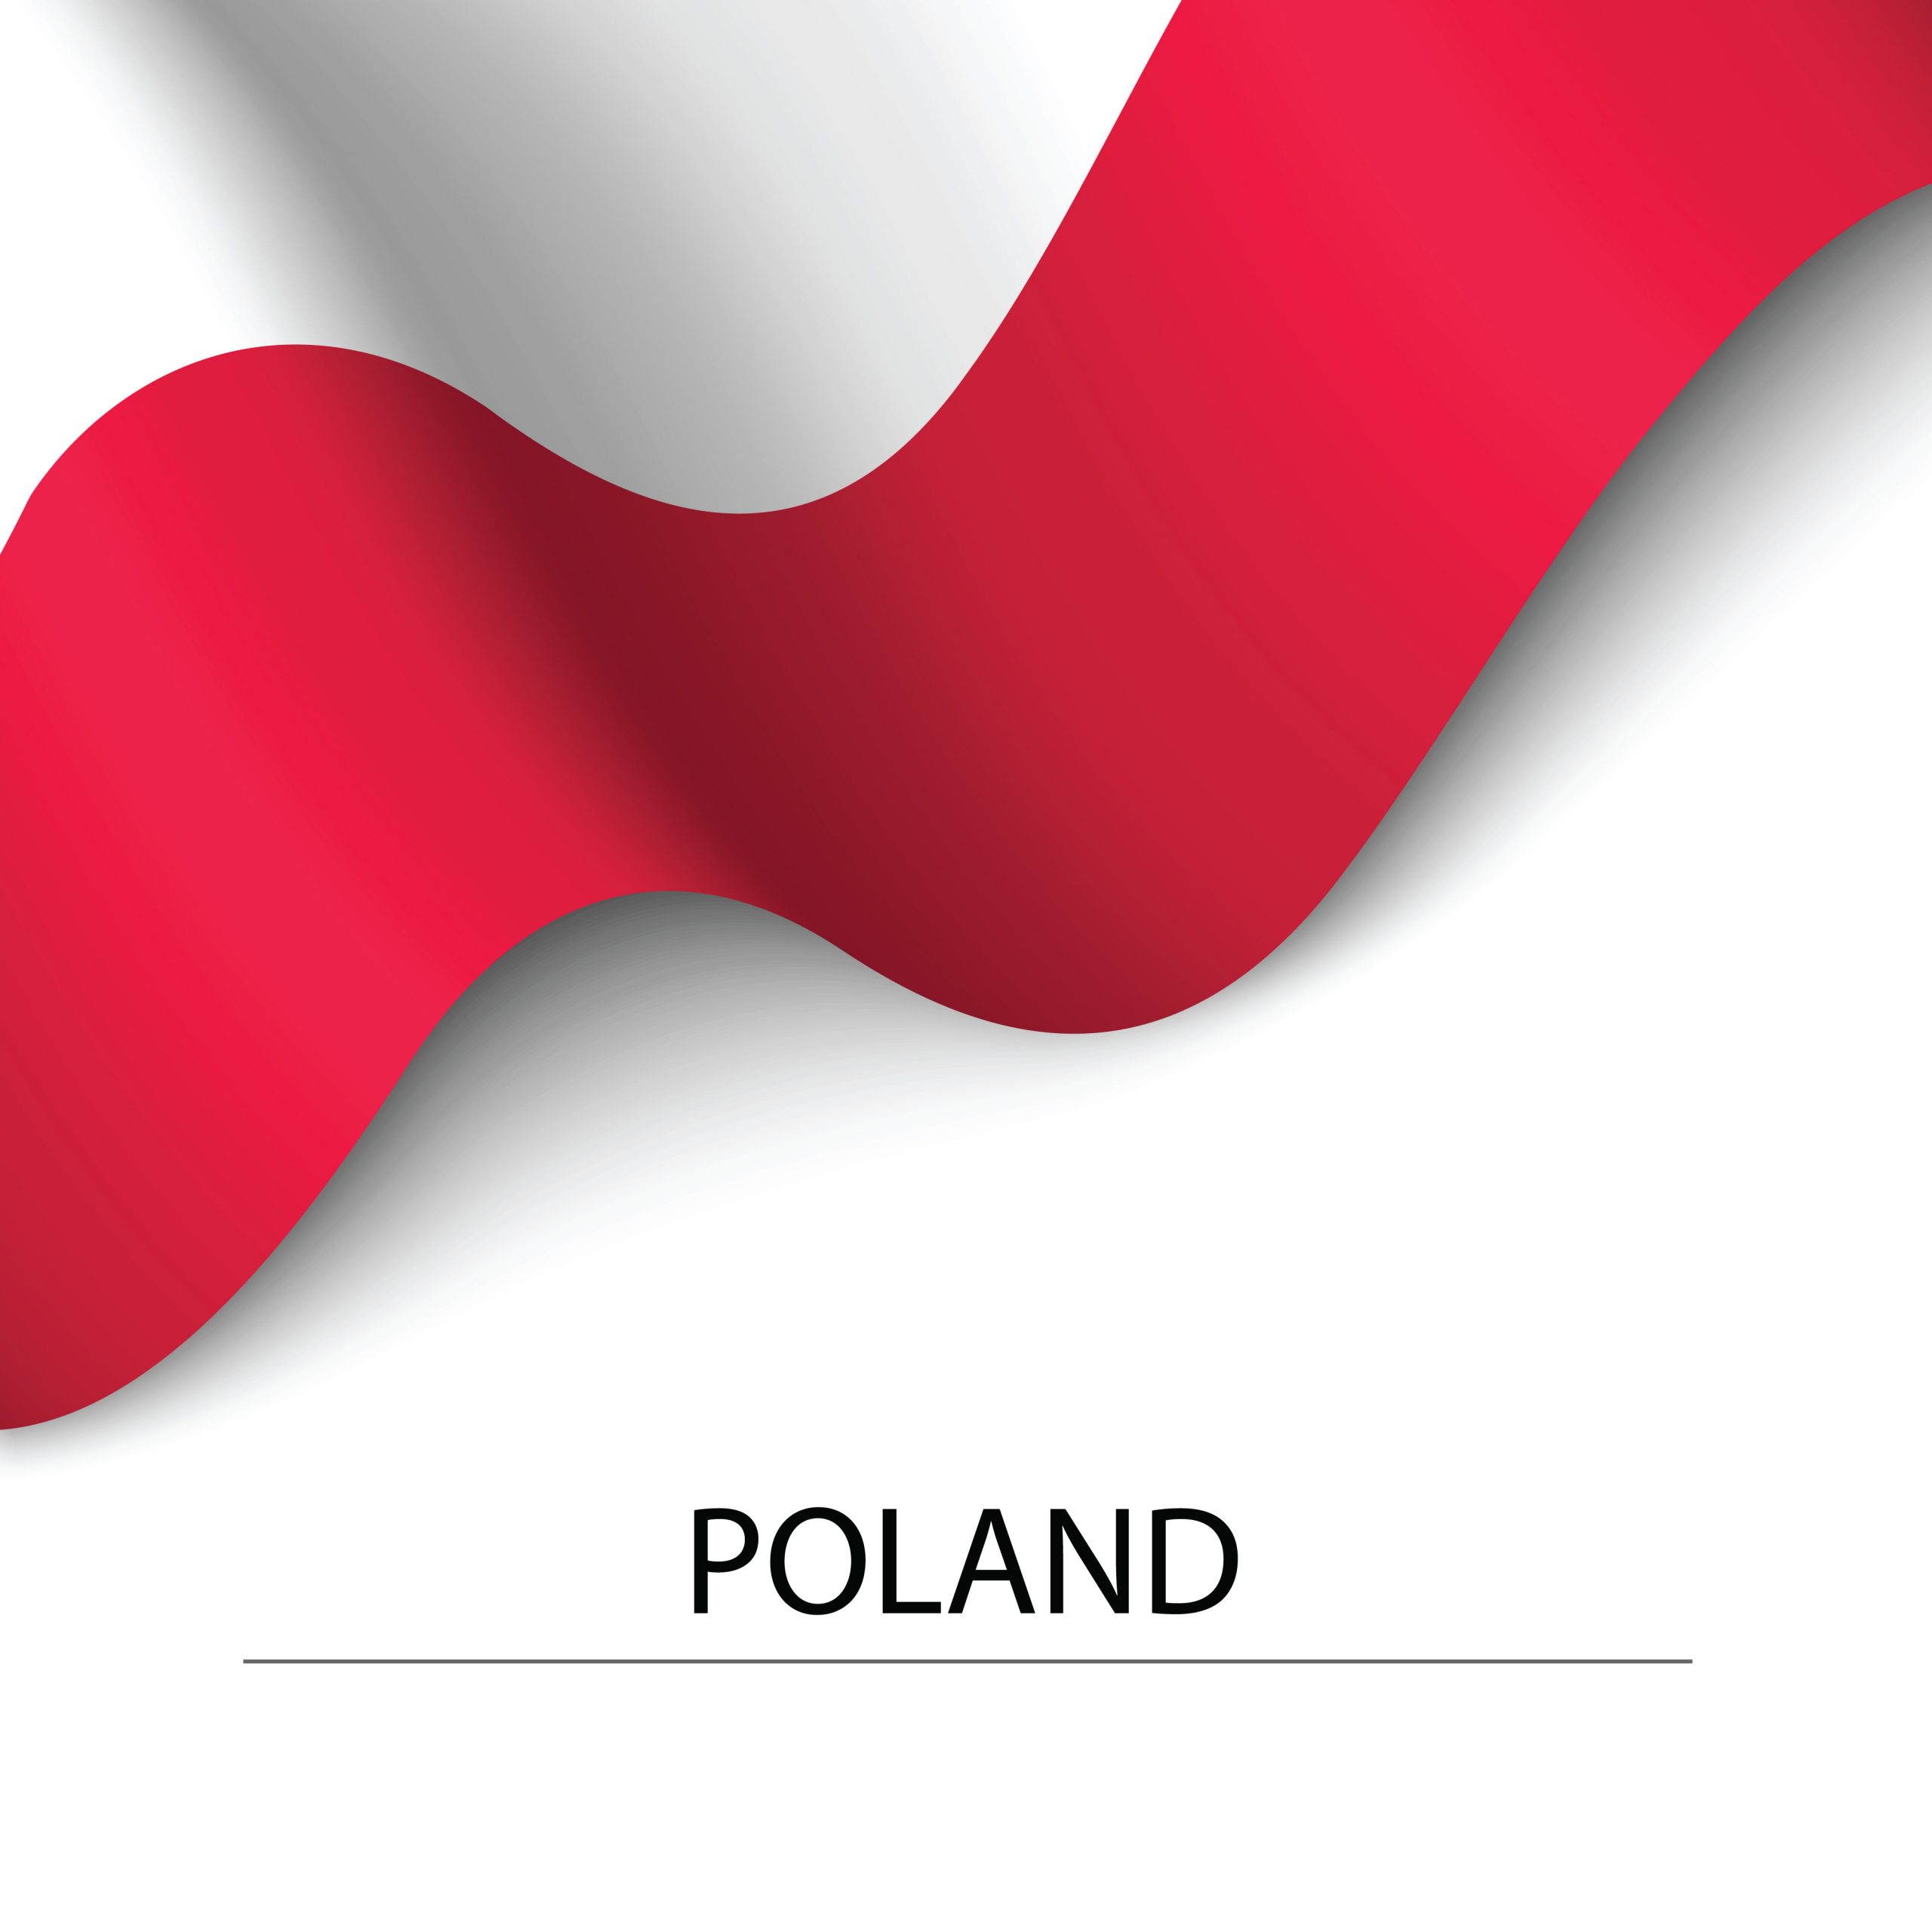 Waving flag of Poland on white background.